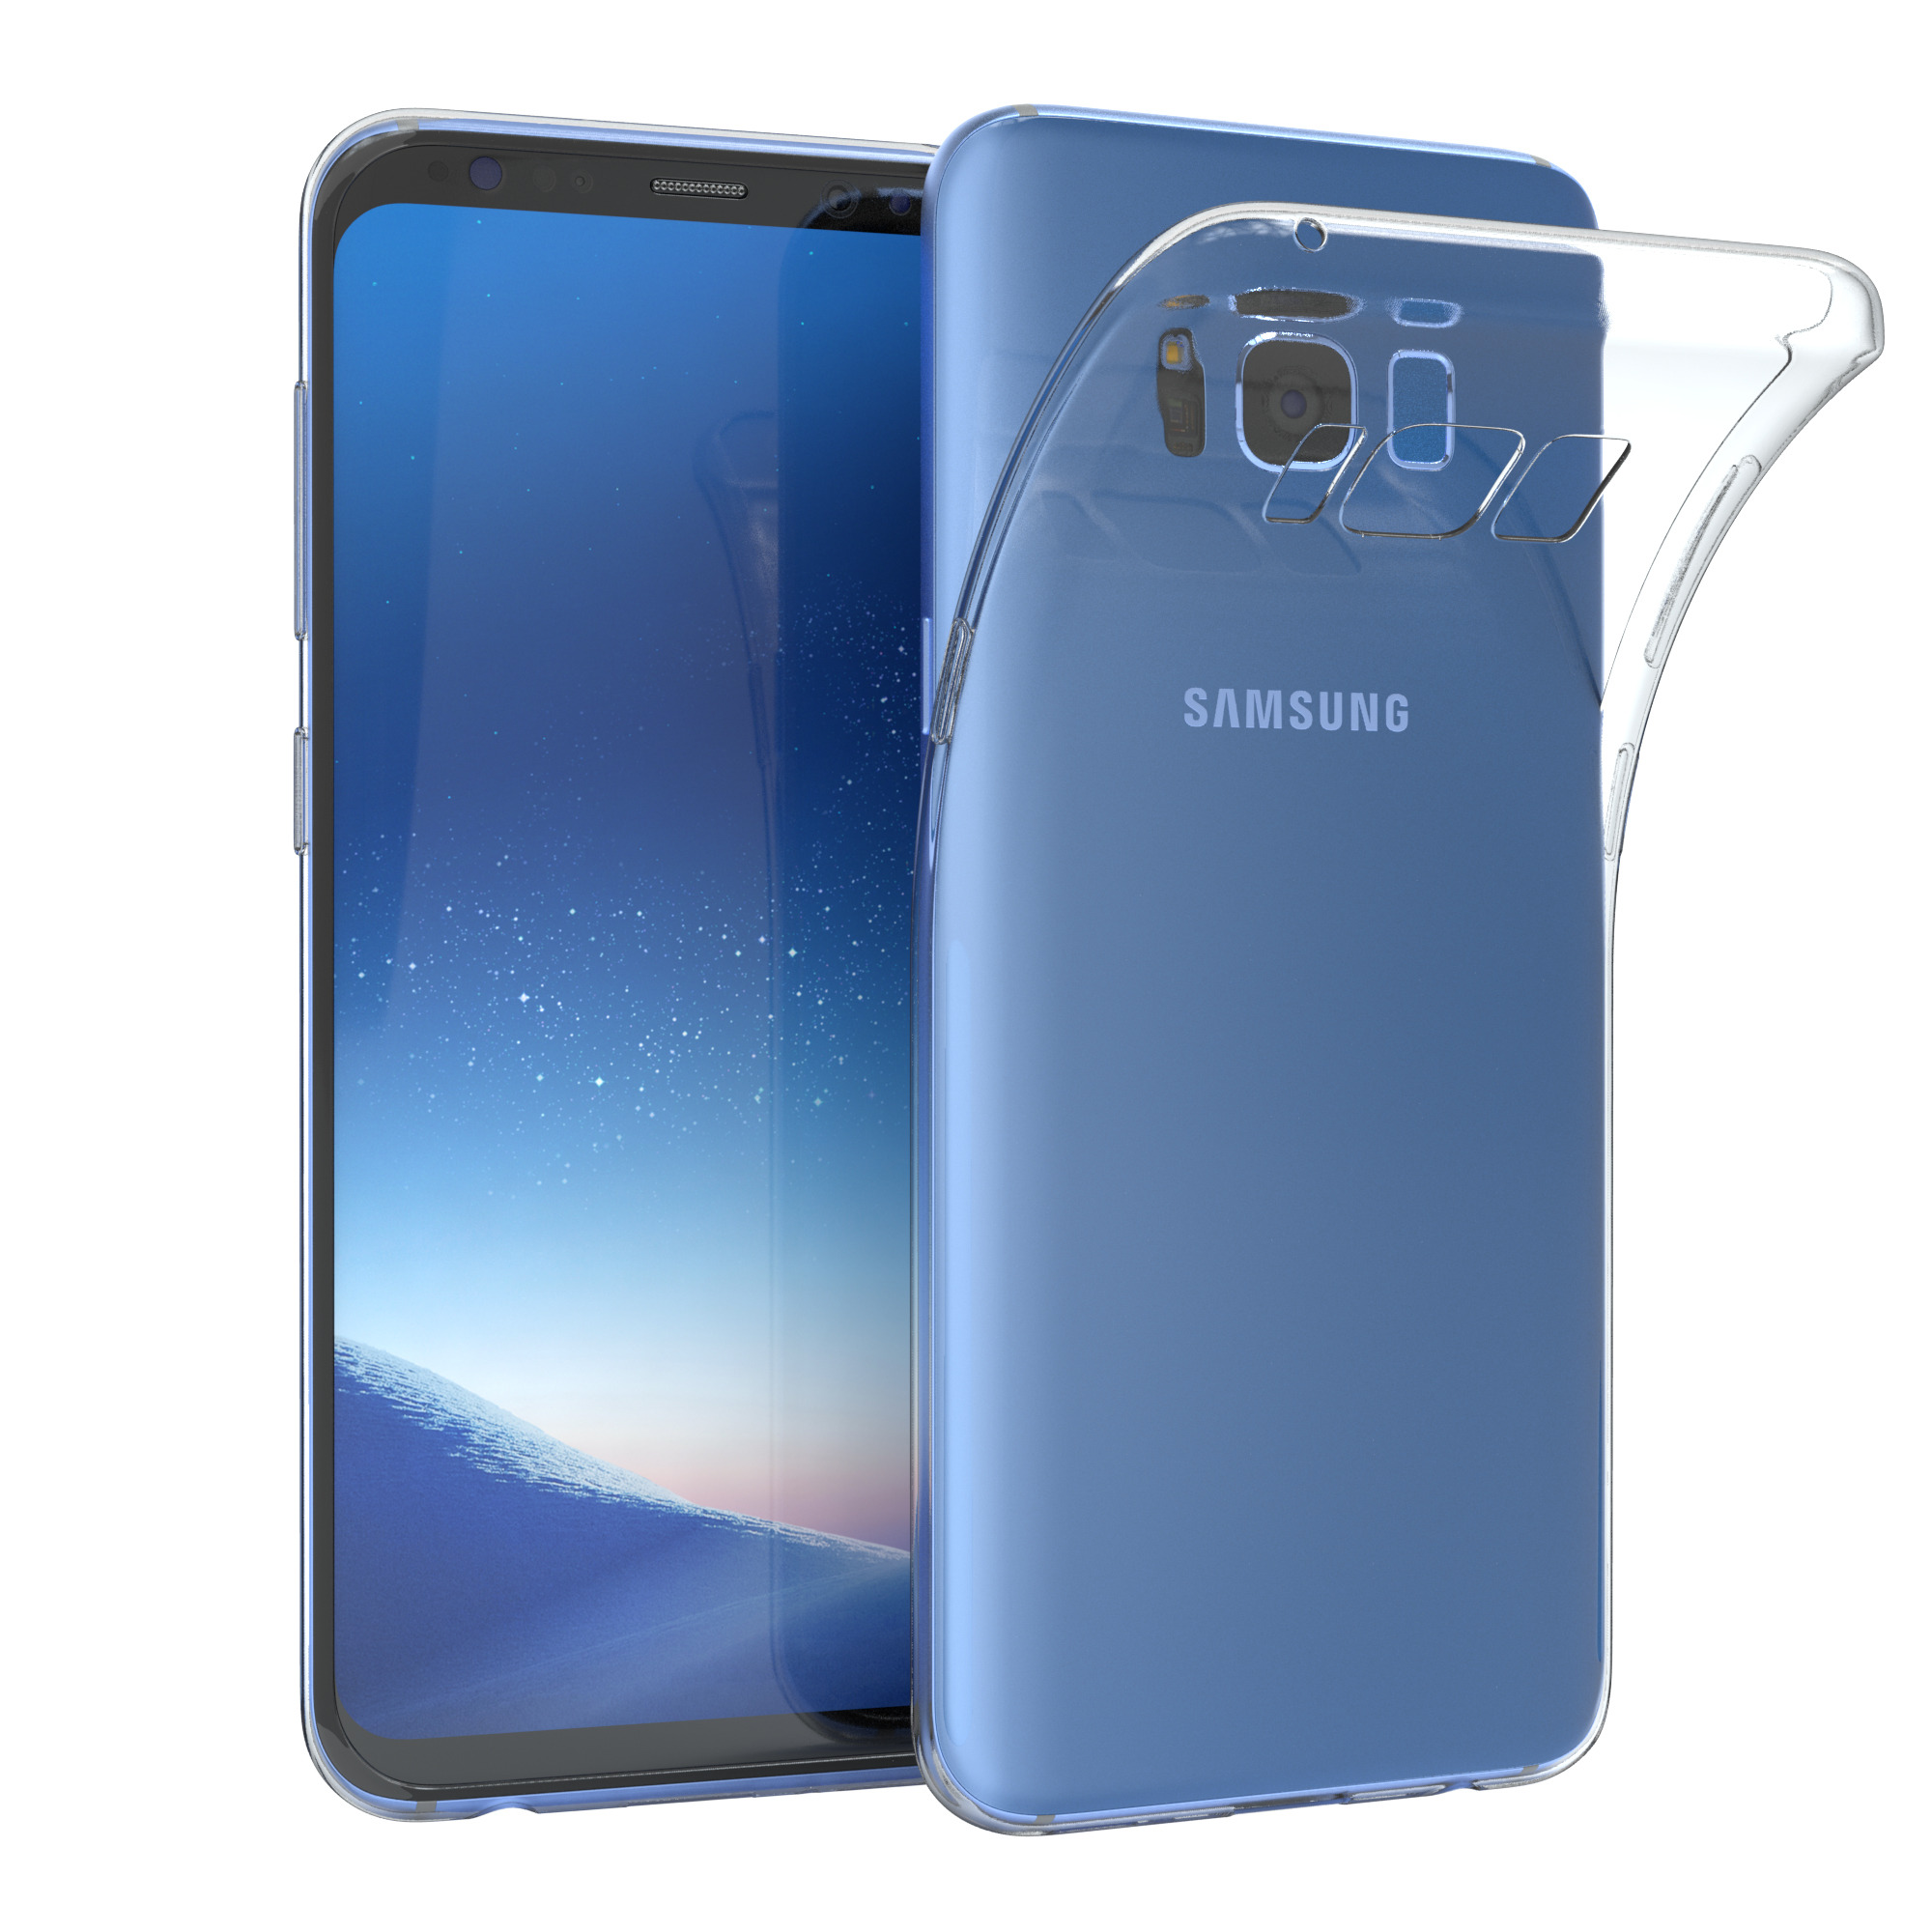 EAZY CASE Backcover, Samsung, S8, Durchsichtig Clear, Galaxy Slimcover